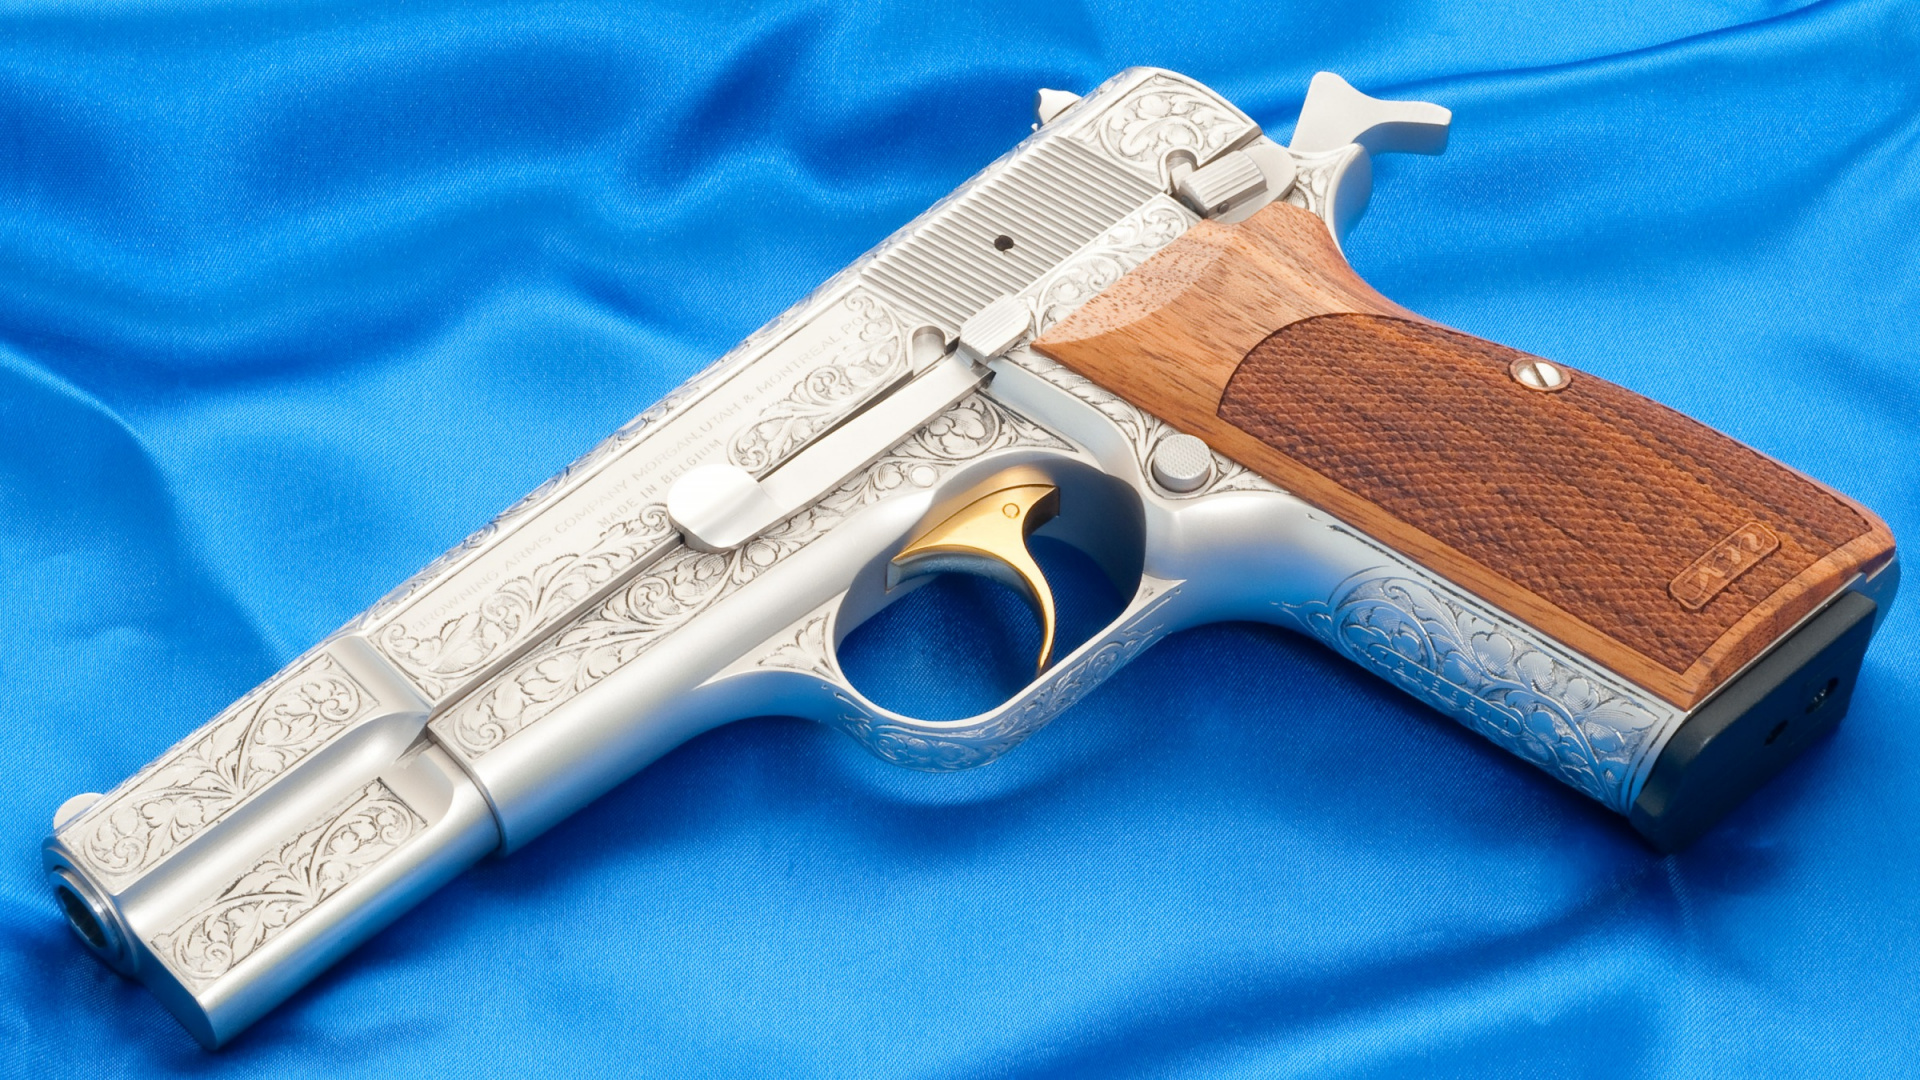 Pistole, M1911 Pistole, Feuerwaffe, Trigger, Revolver. Wallpaper in 1920x1080 Resolution